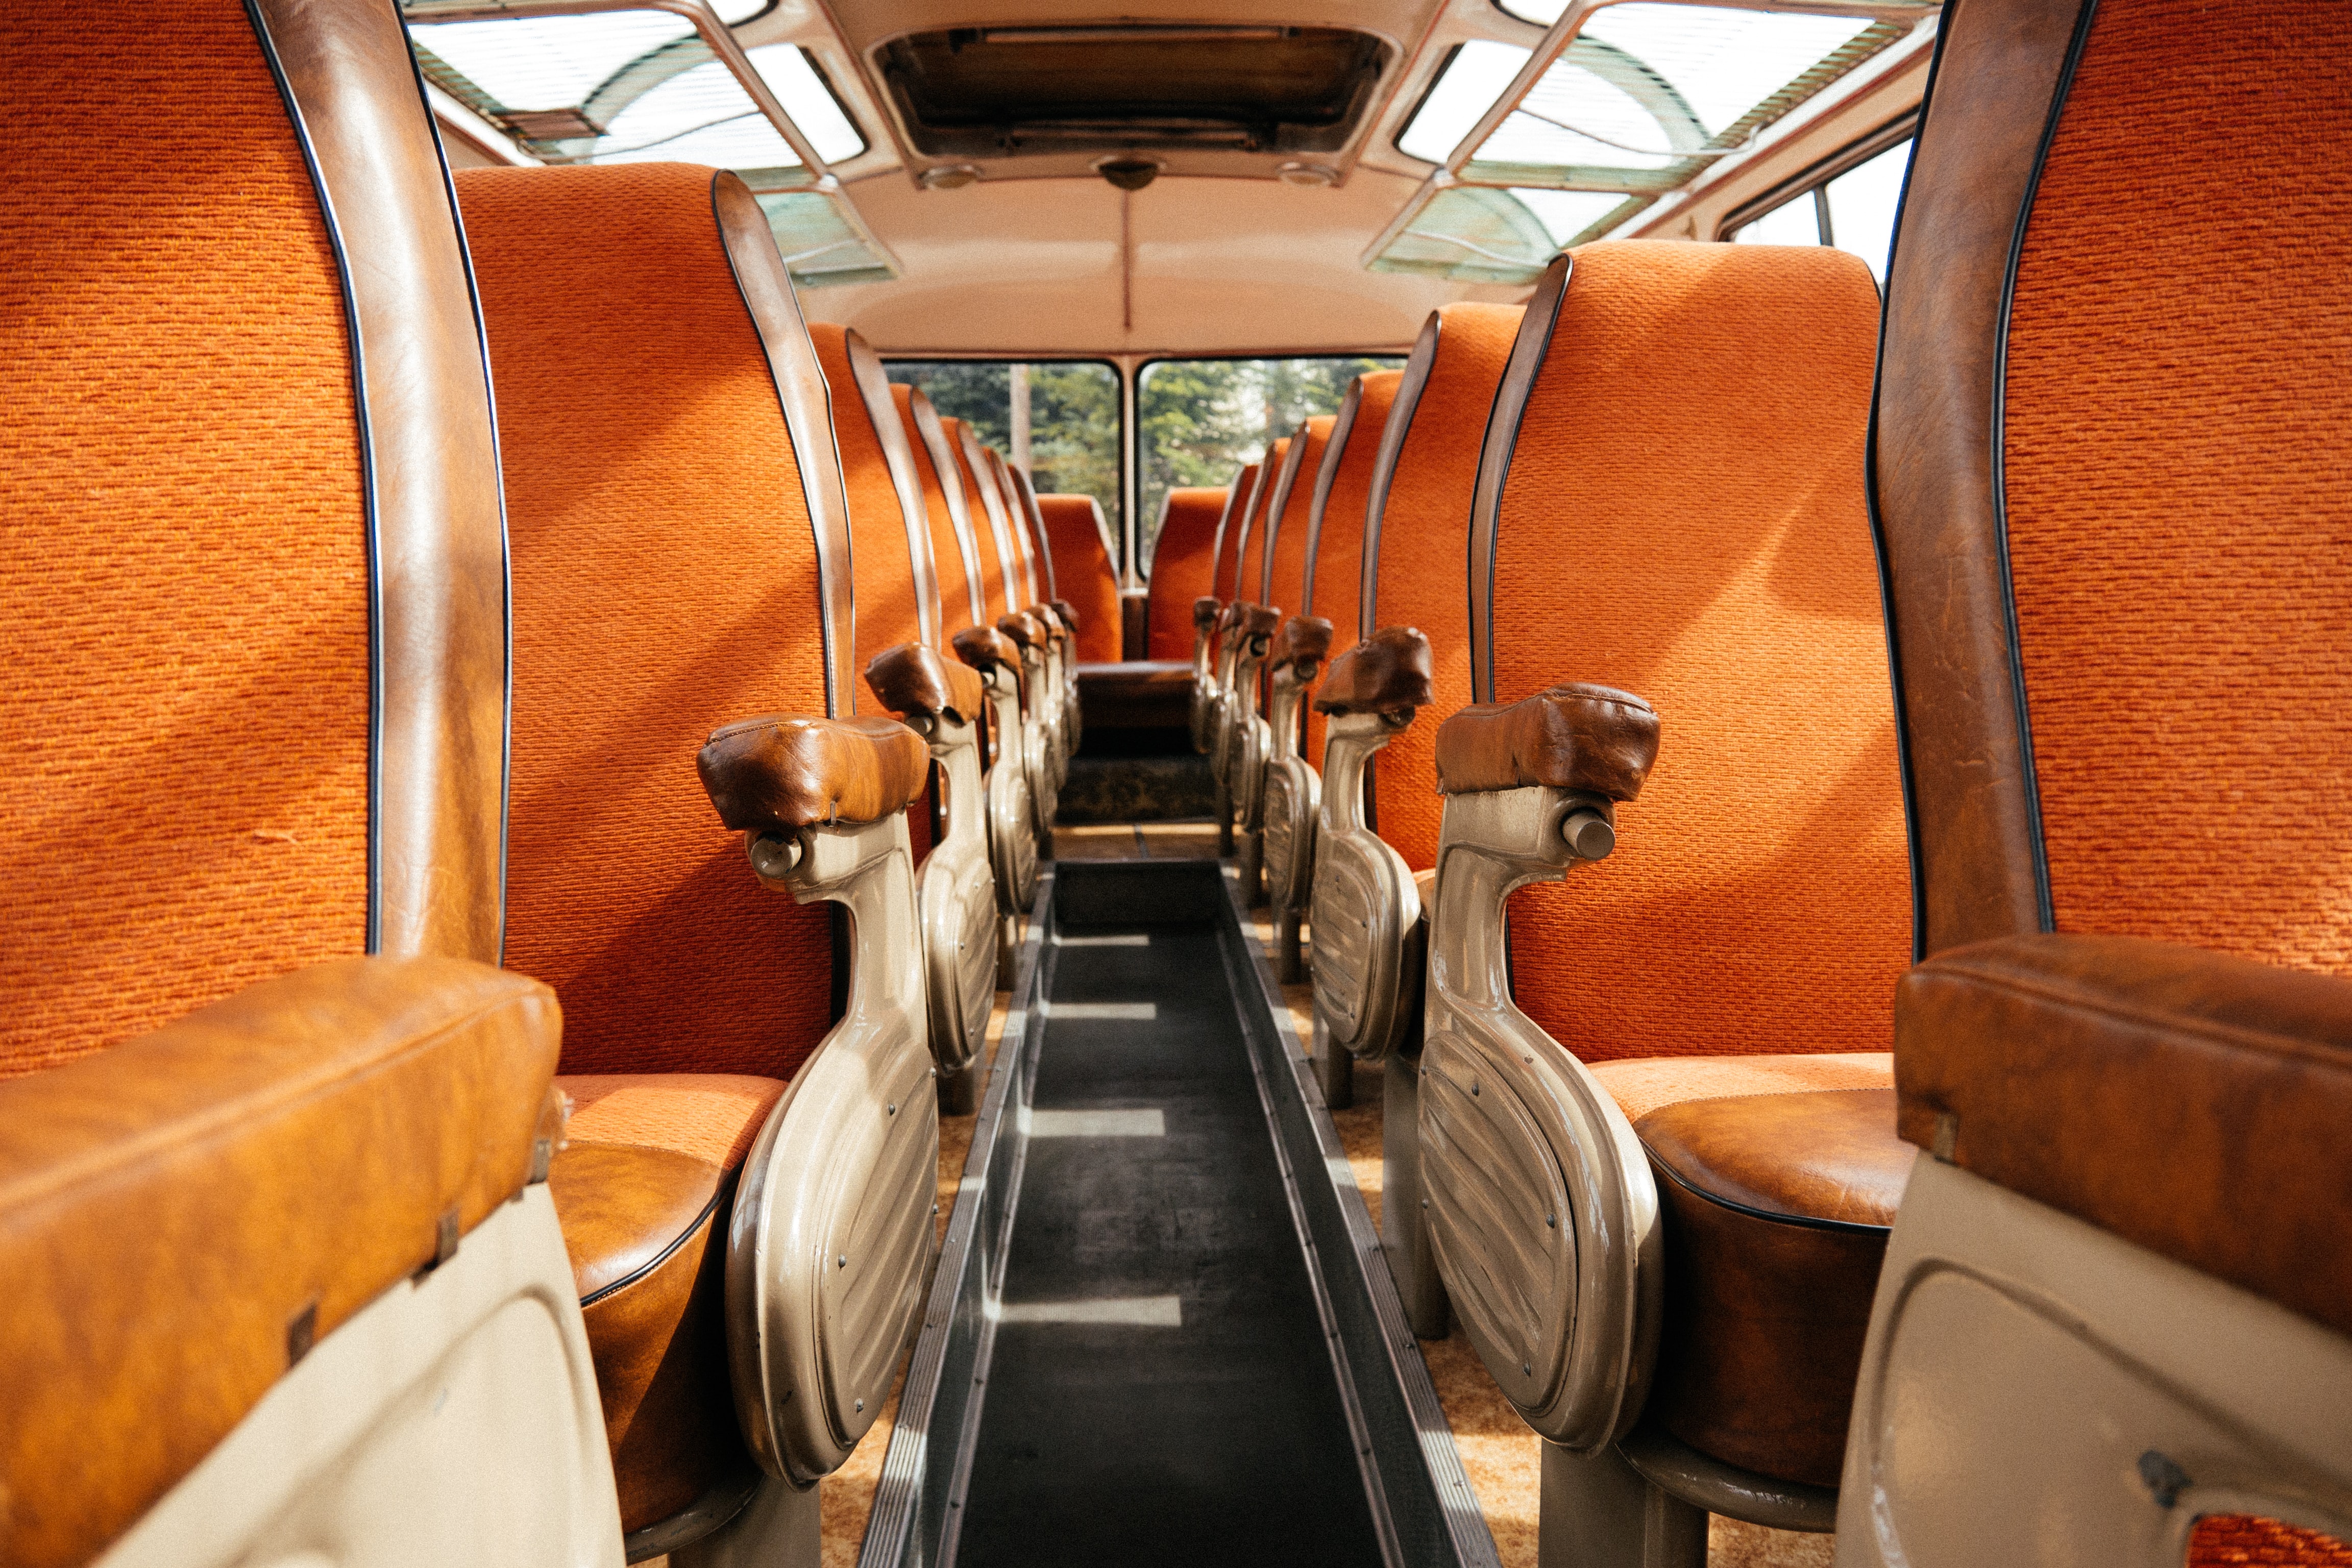 shuttle bus interior